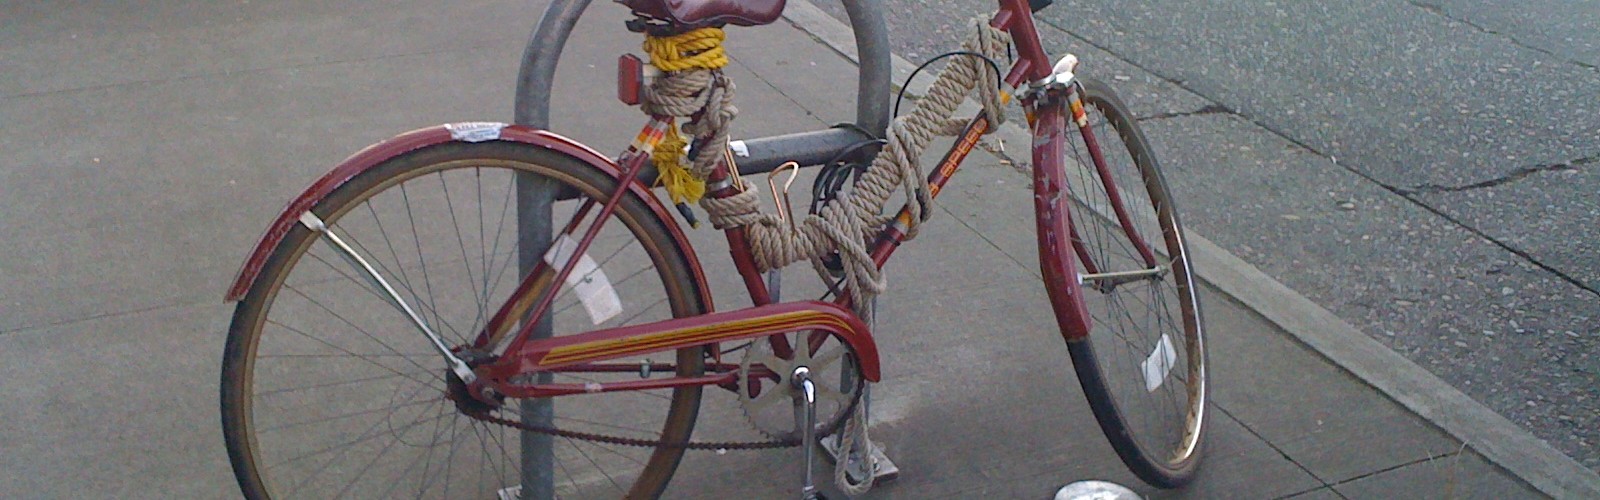 Bondage bike